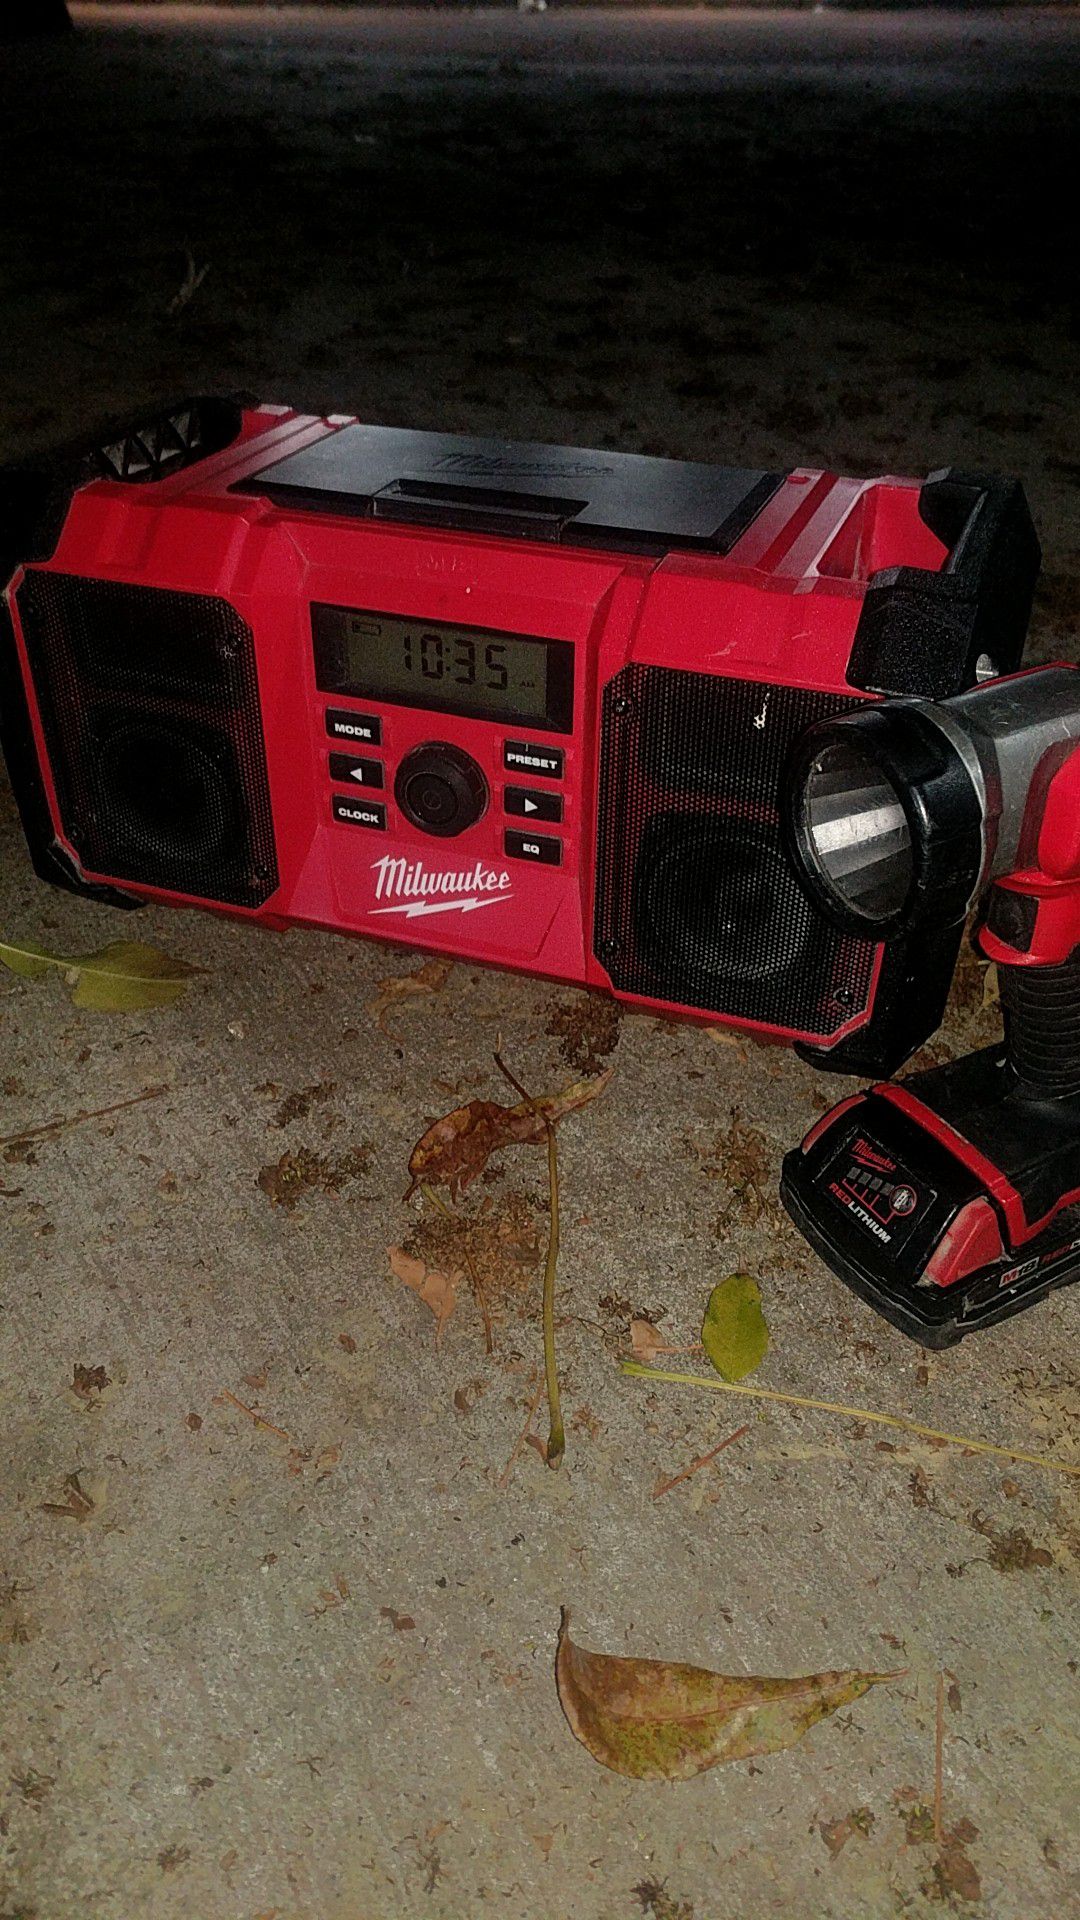 Milwaukee jobsite radio charger and flashlight